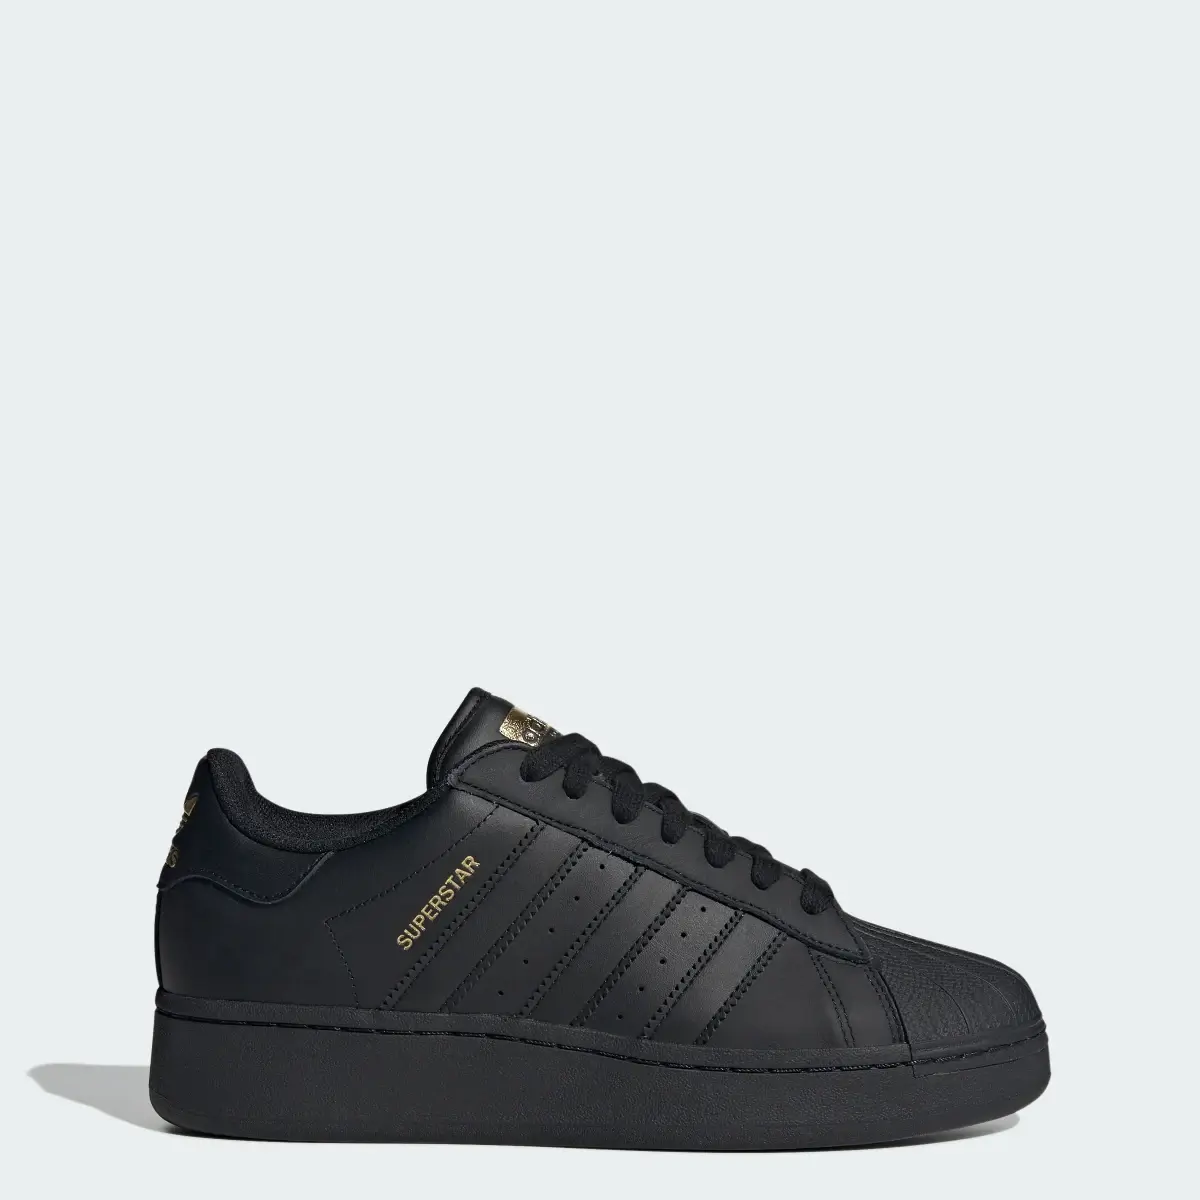 Adidas Superstar XLG Ayakkabı. 1